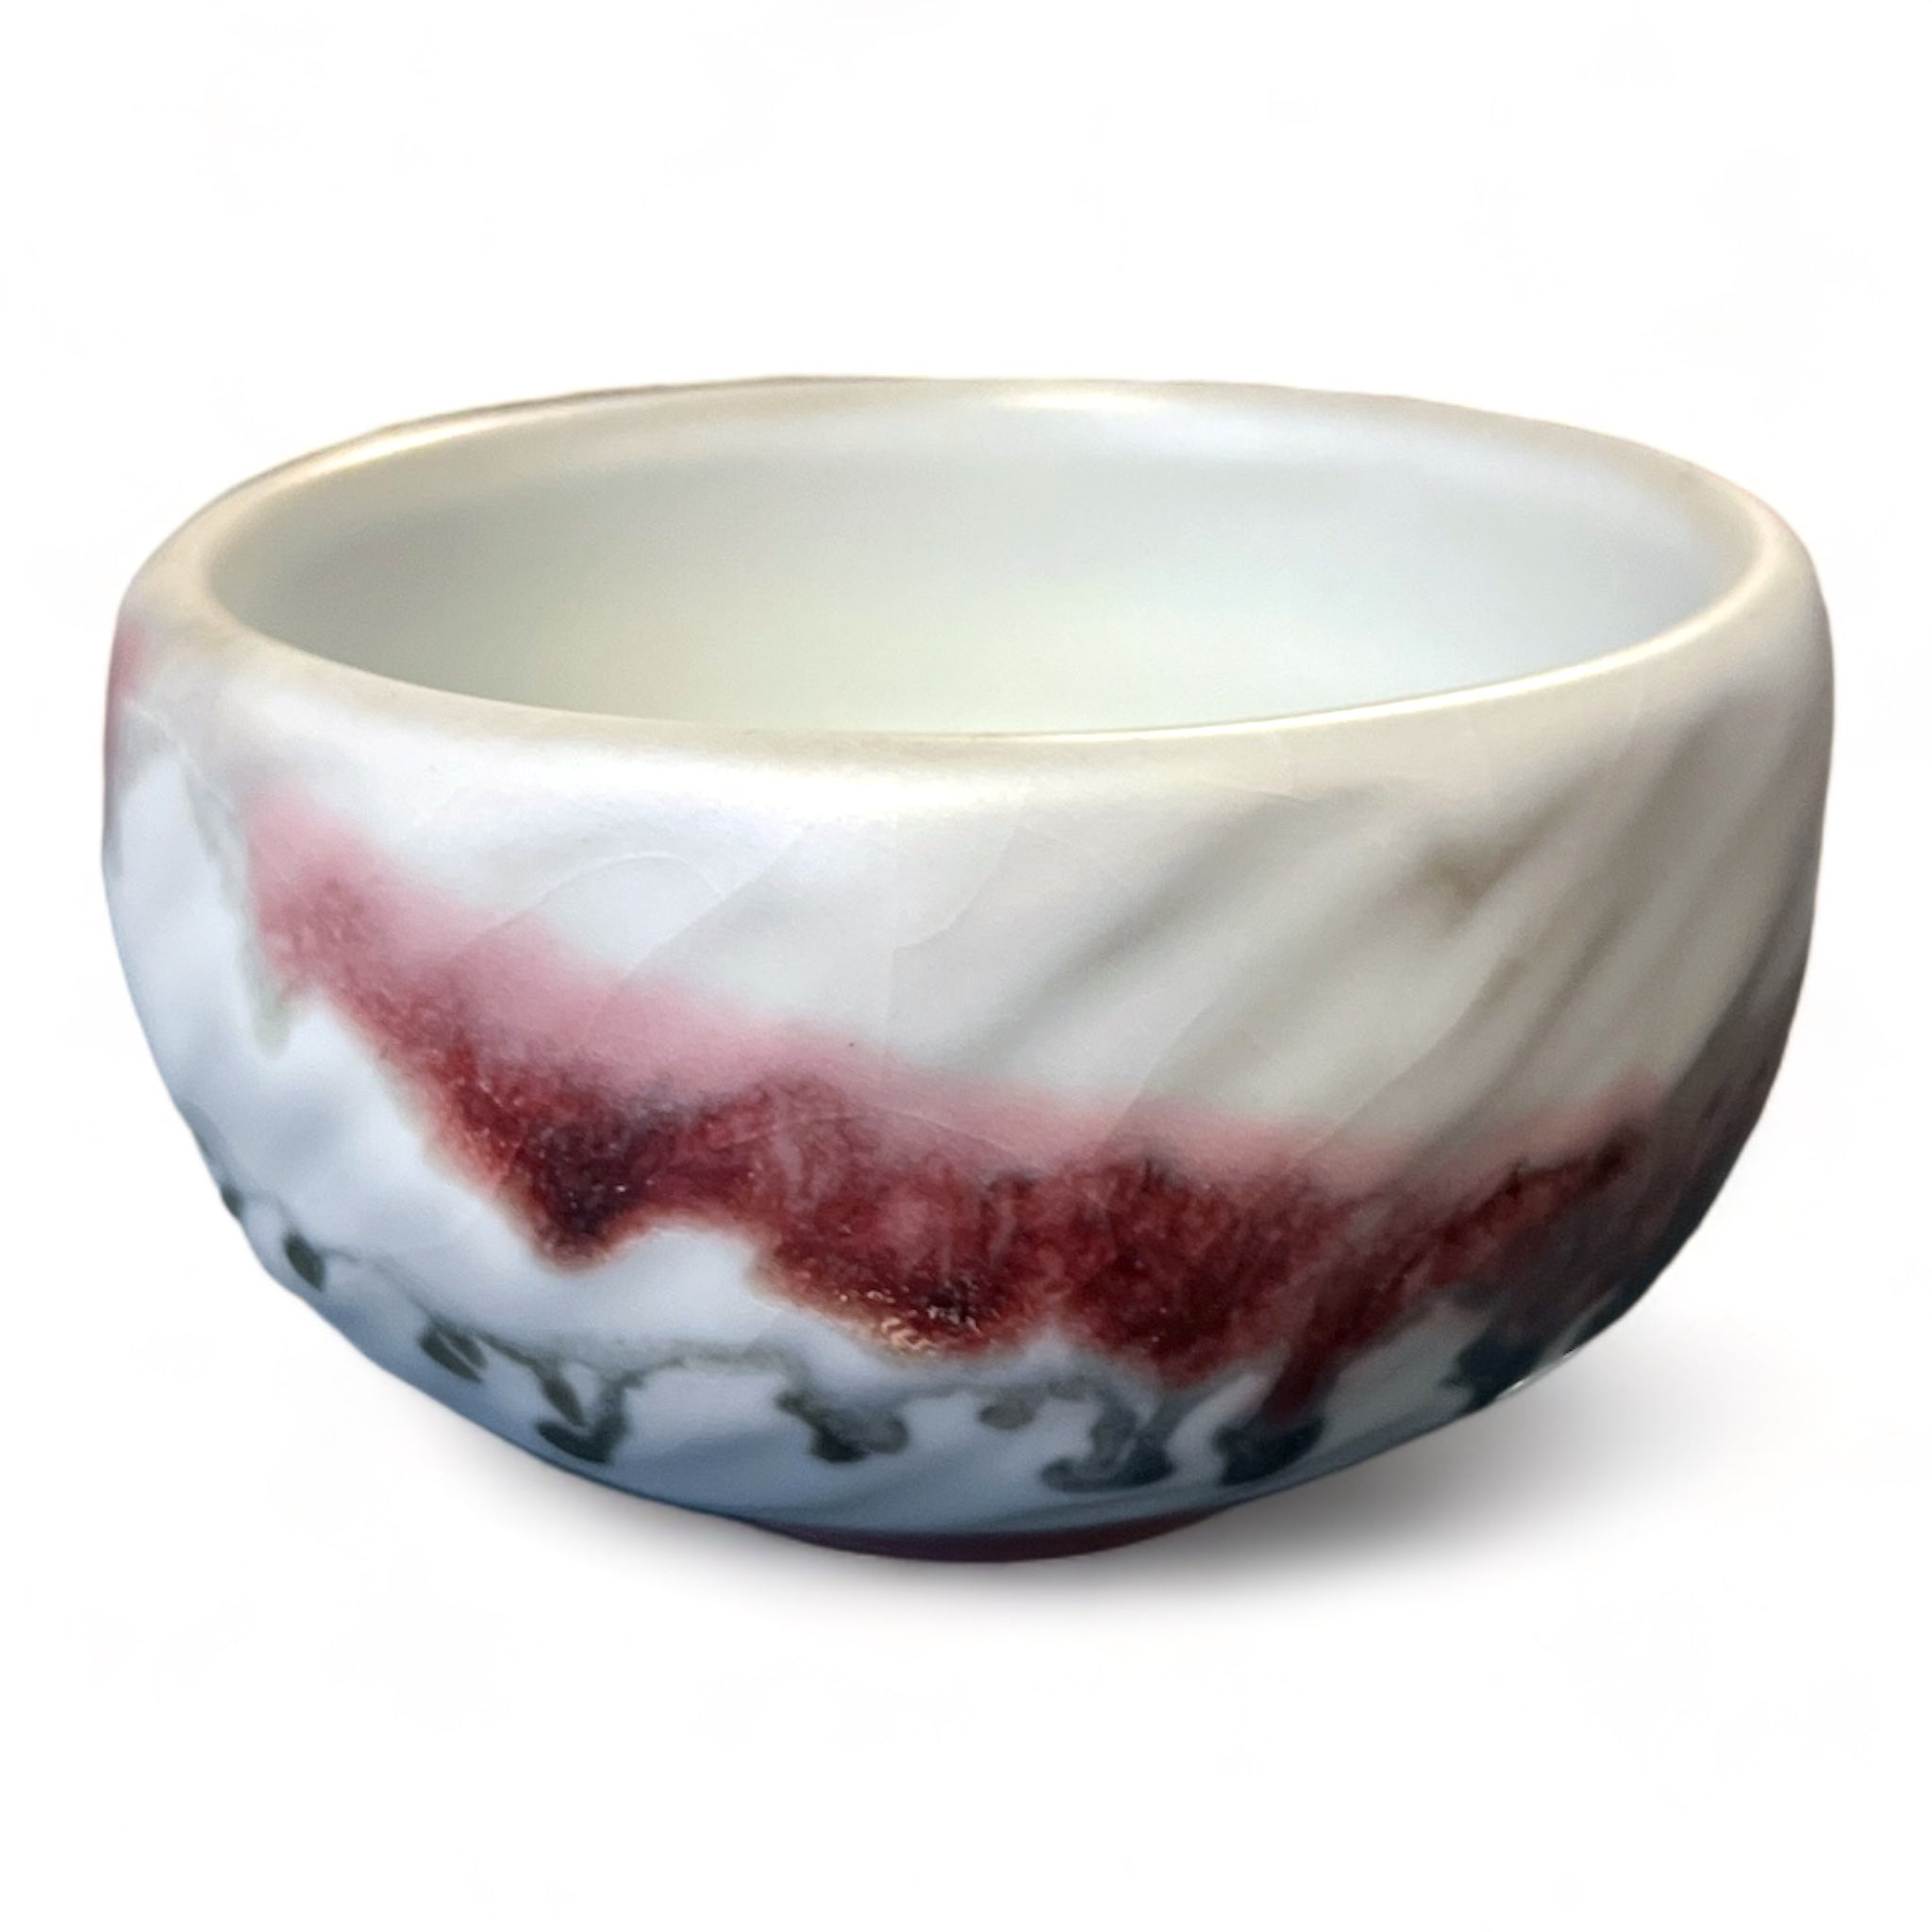 Taiwanese Handmade Wood-Fired Ceramic Teacup - Crimson Cloudscape